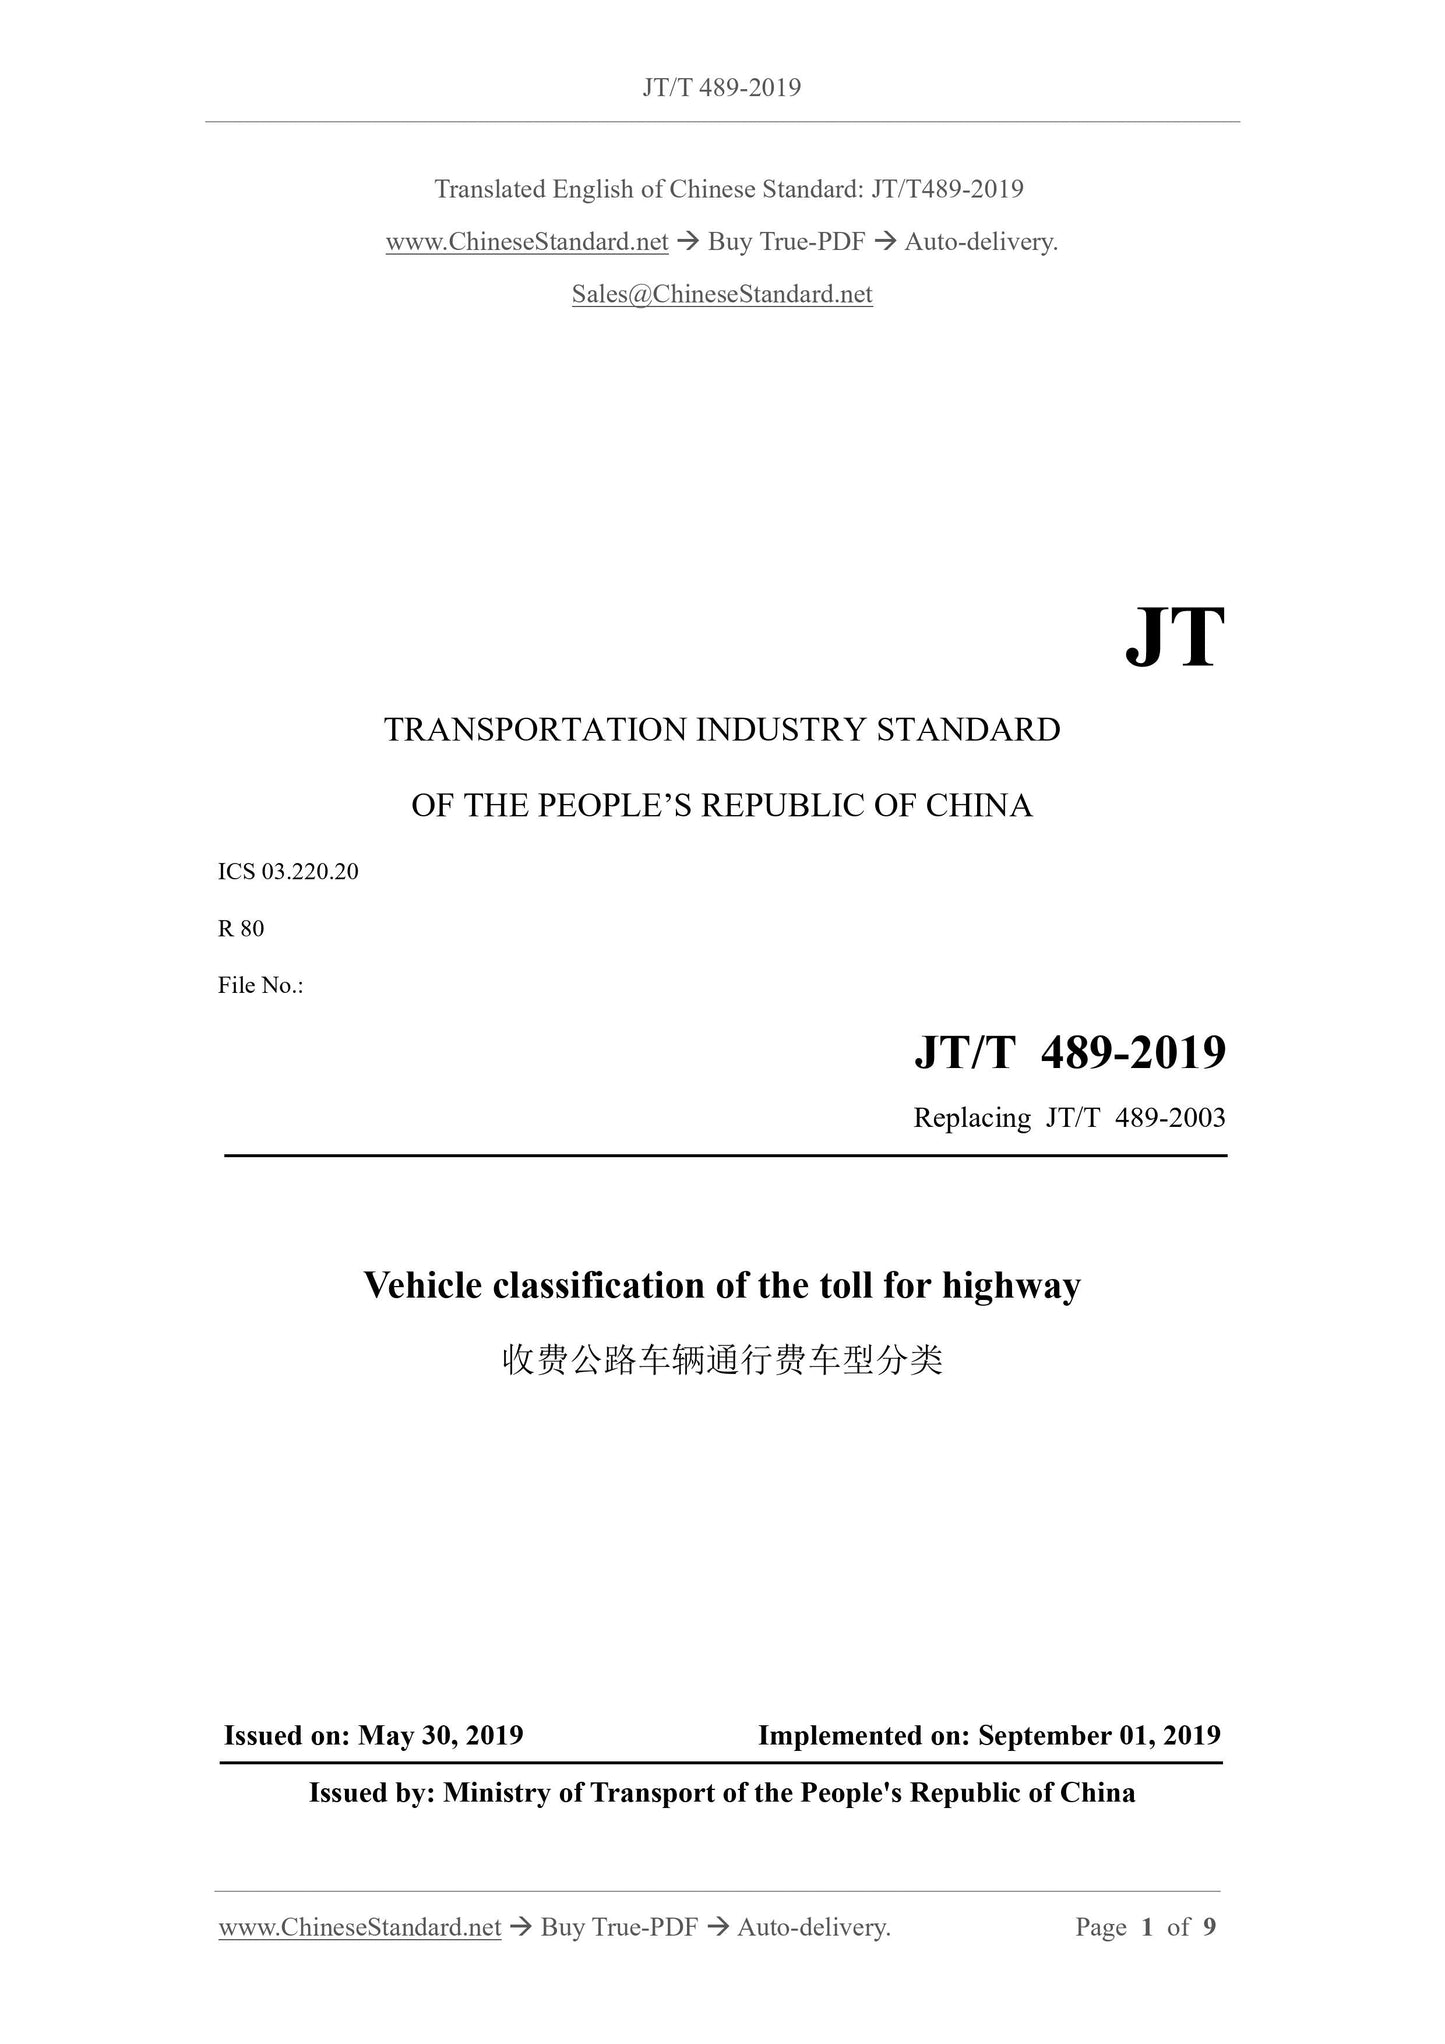 JT/T 489-2019 Page 1